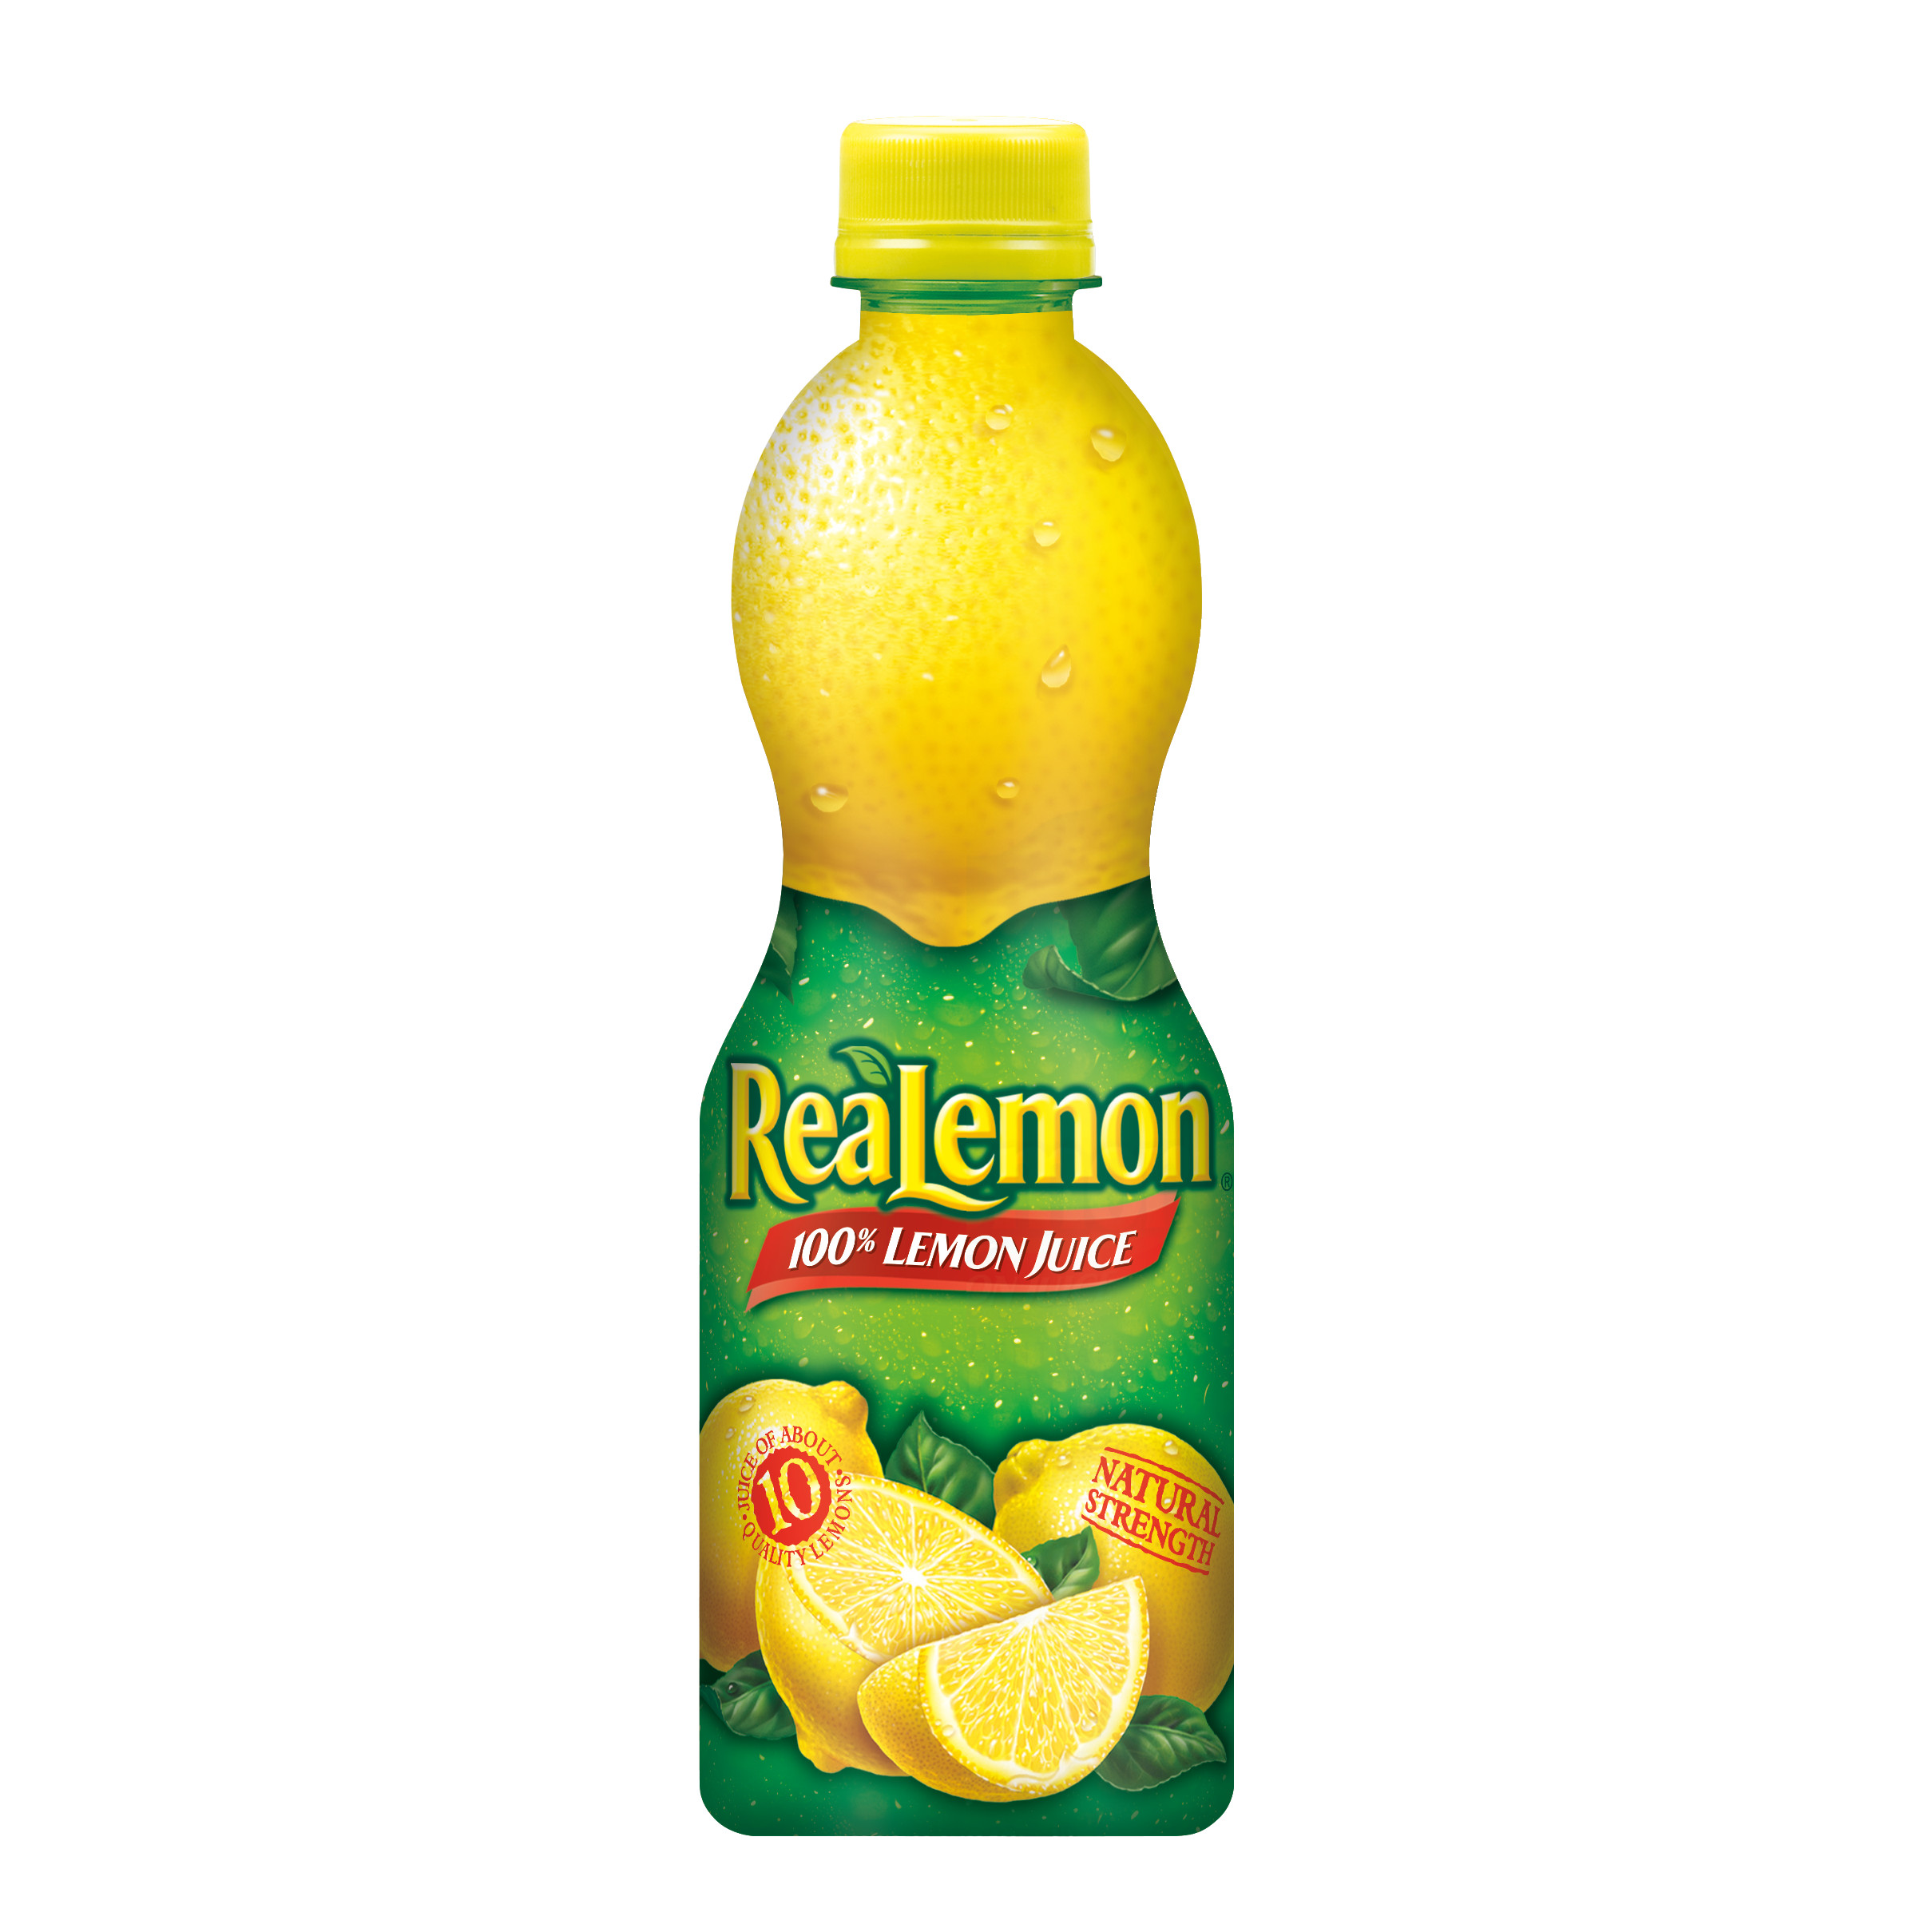 ReaLemon 100% Lemon Juice, 15 fl oz bottle - image 4 of 7